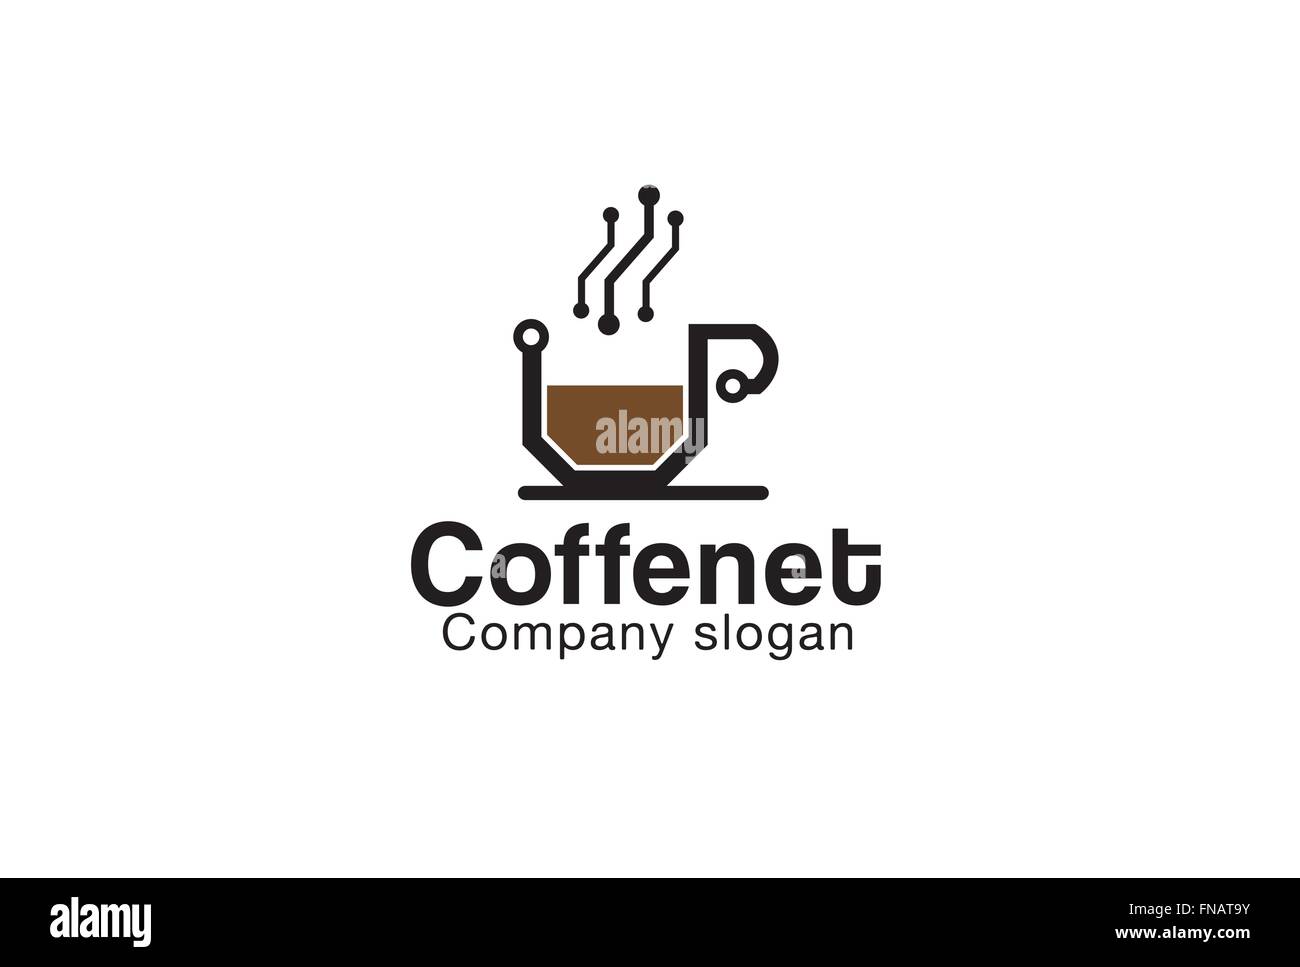 Coffee Network Design Illustration Stock Vector